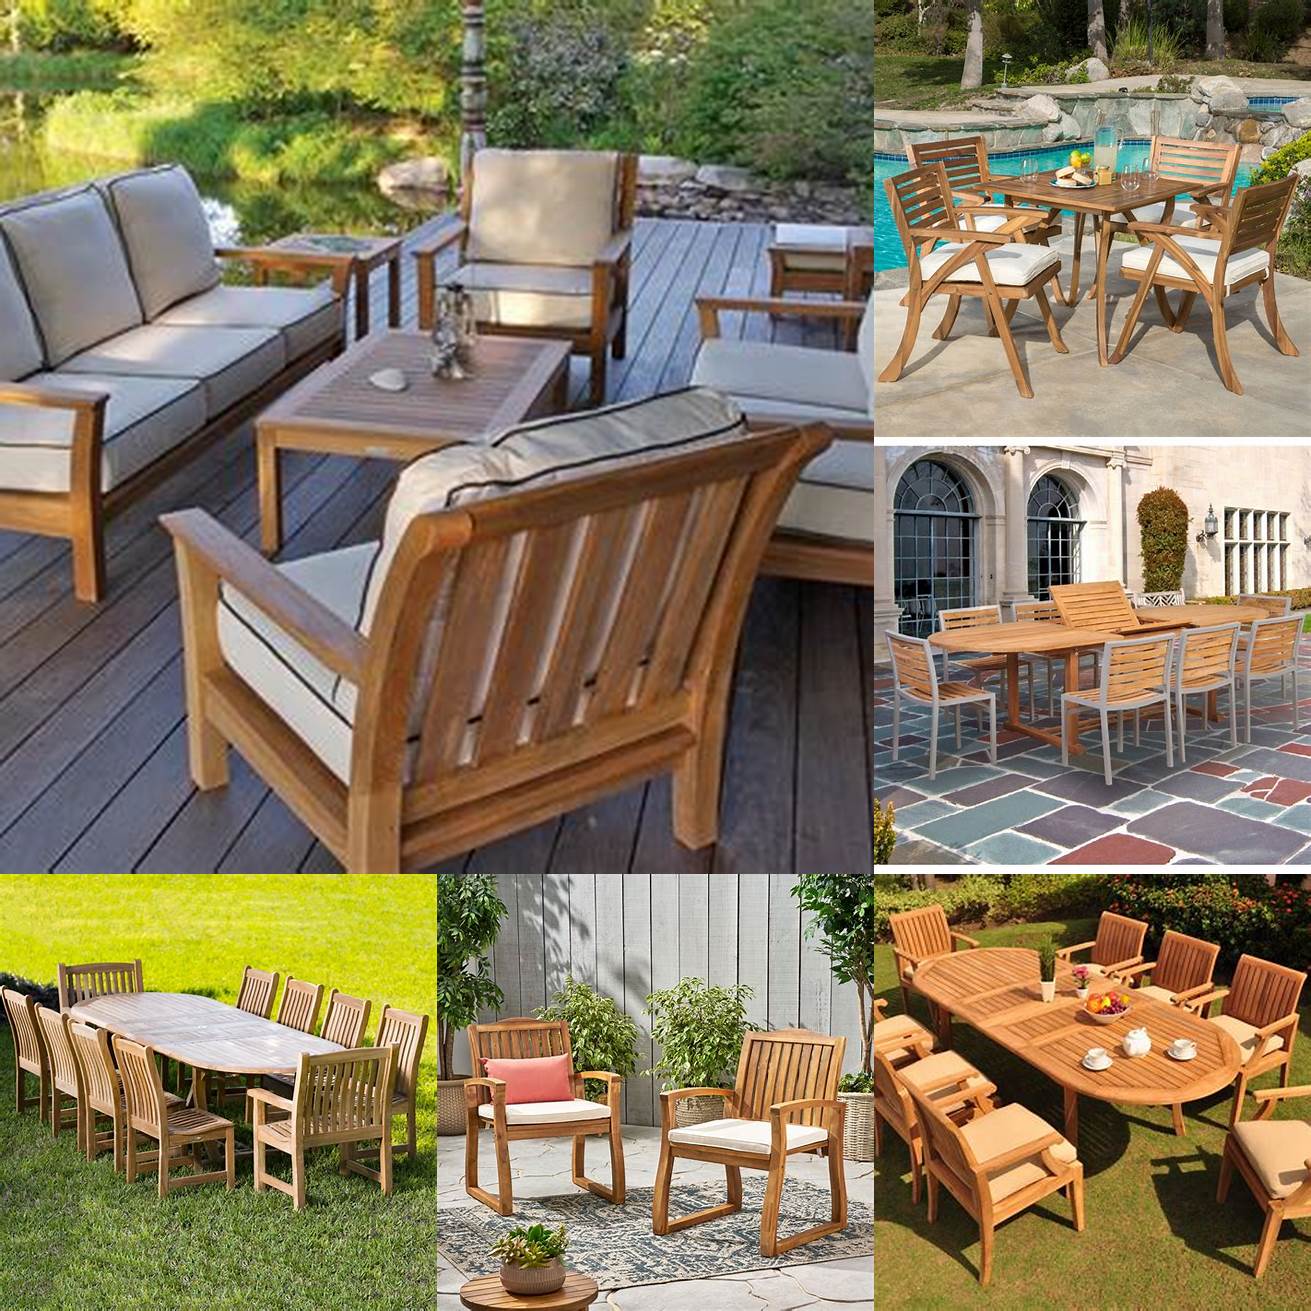 Teak-like patio furniture sets